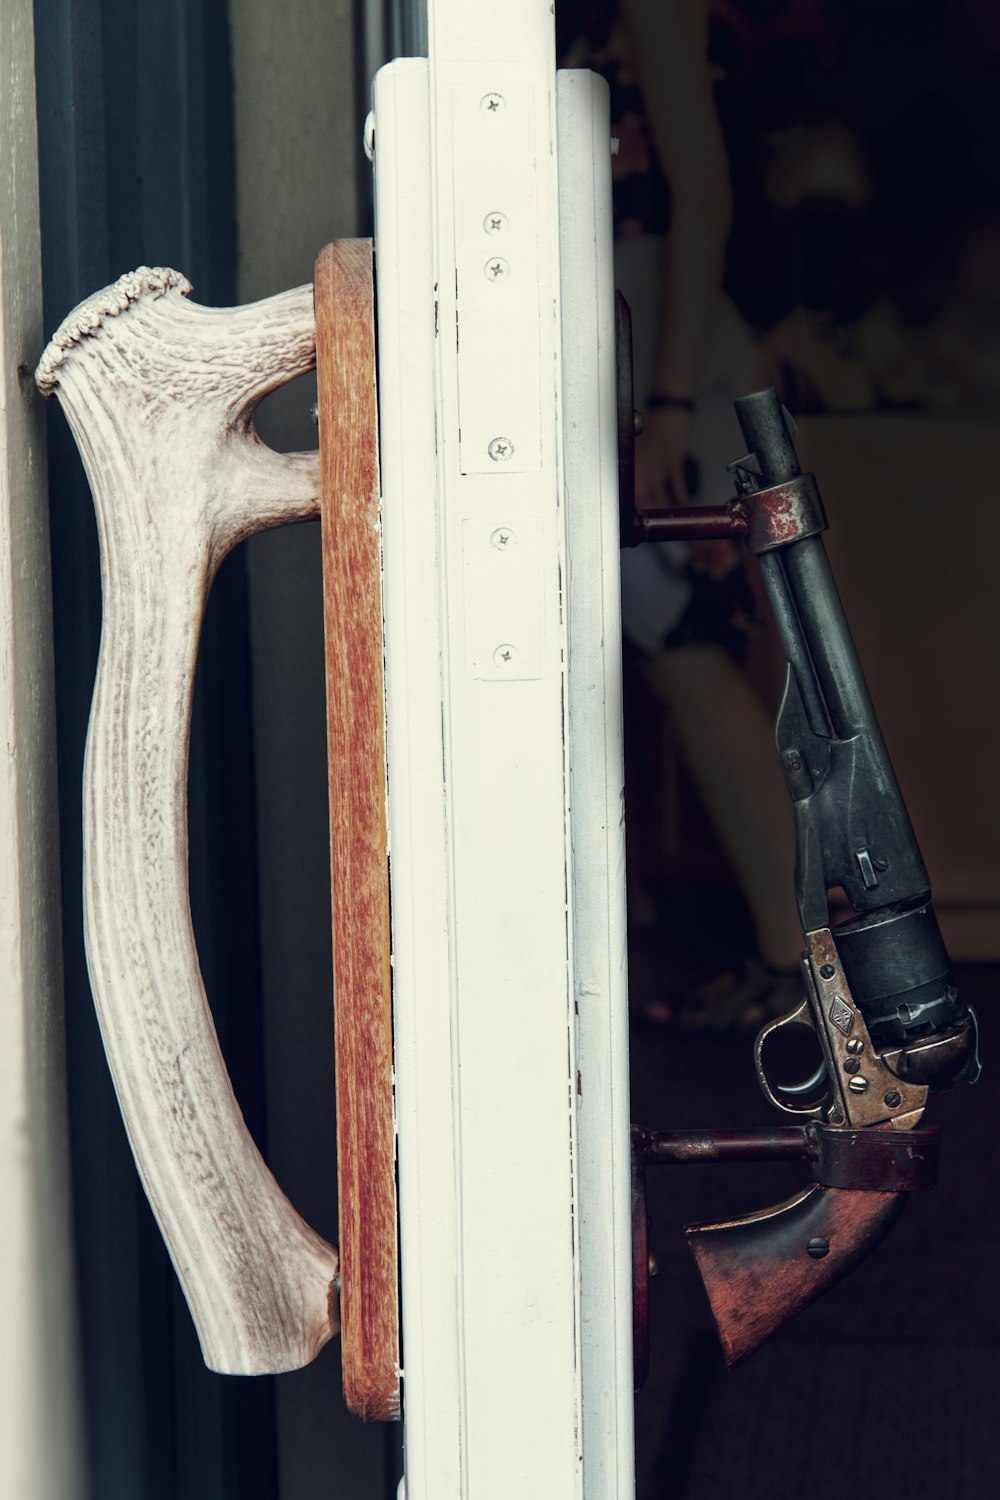 a door handle with a gun on it